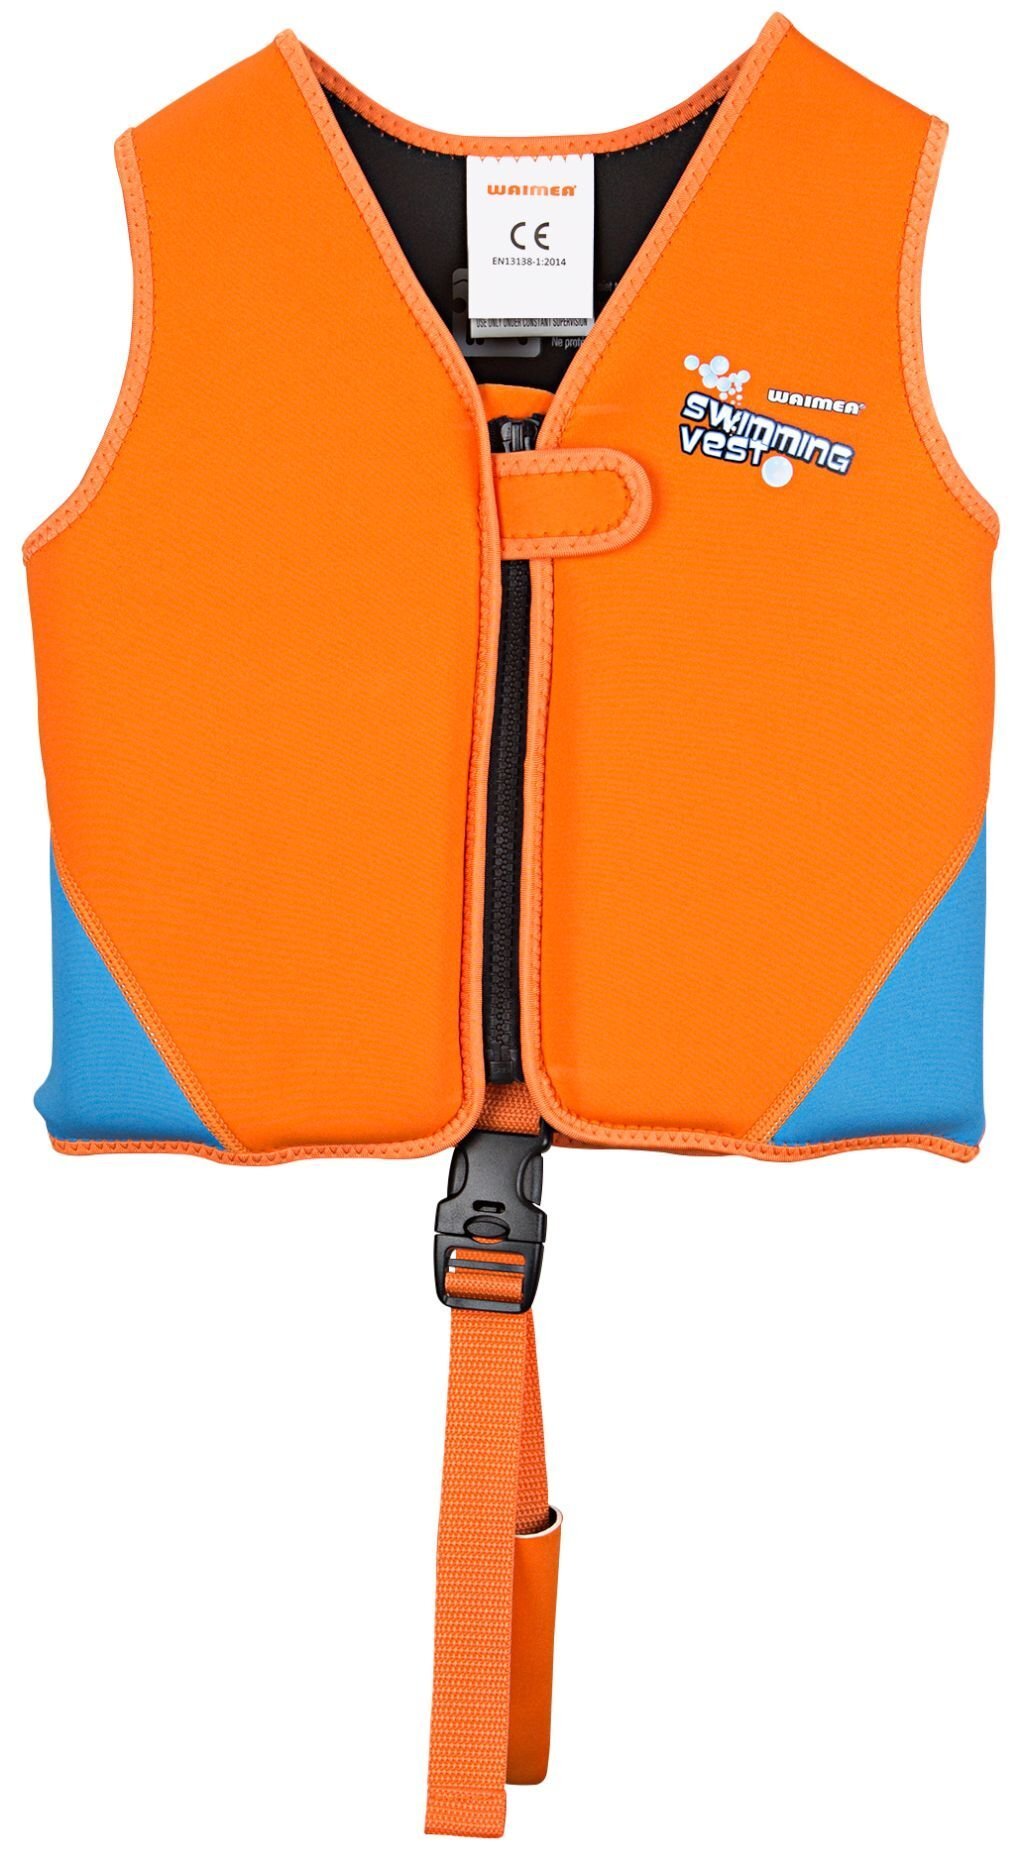 Plaukimo liemenė Waimea 52ZX, oranžinė kaina | pigu.lt